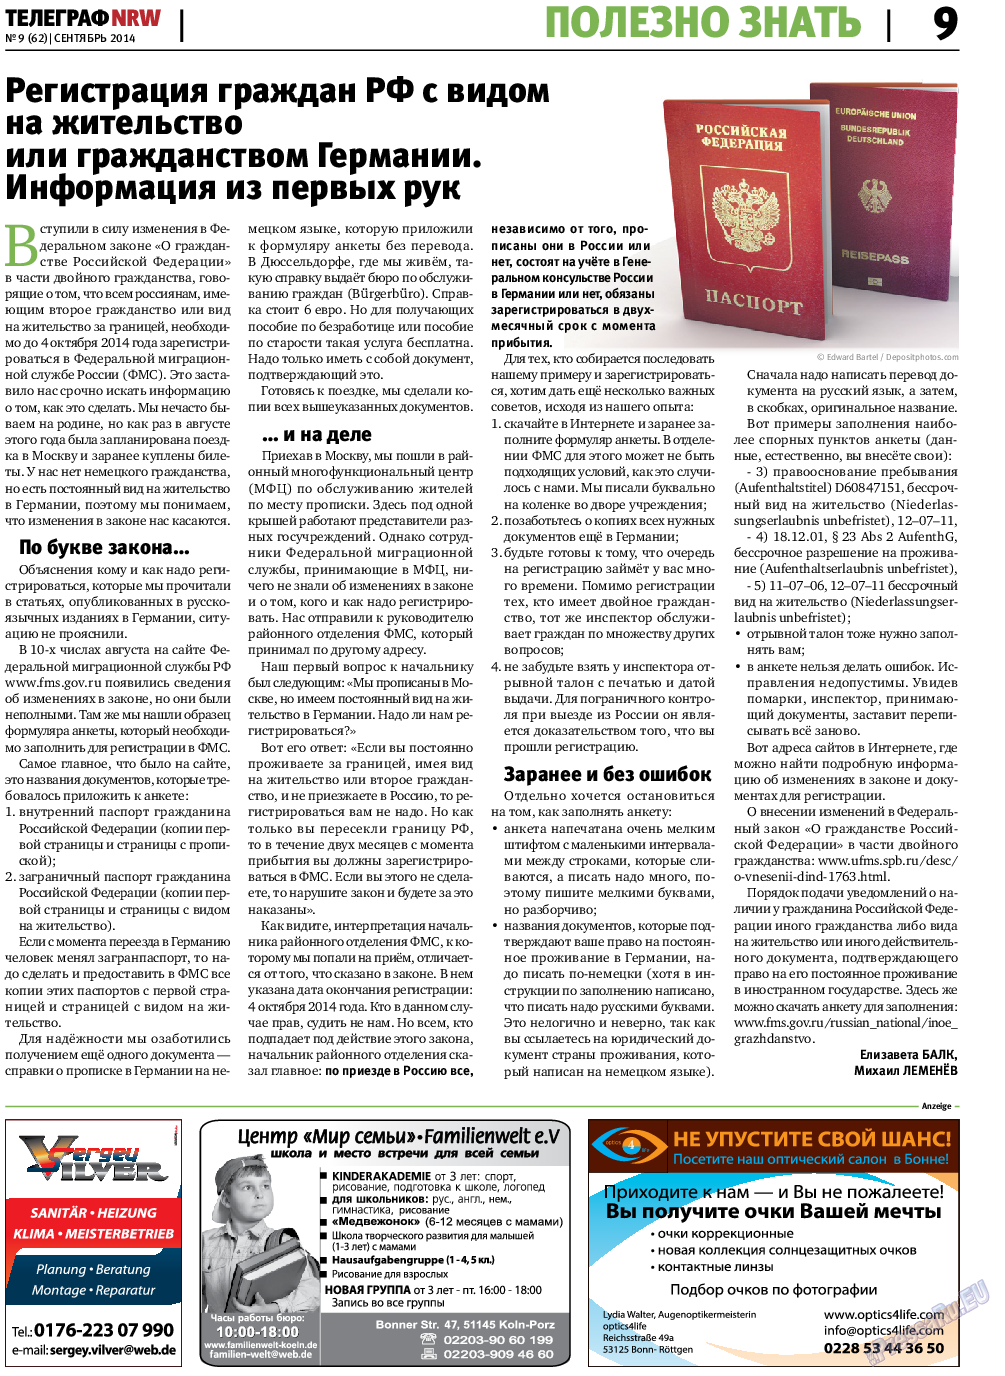 Телеграф NRW, газета. 2014 №9 стр.9